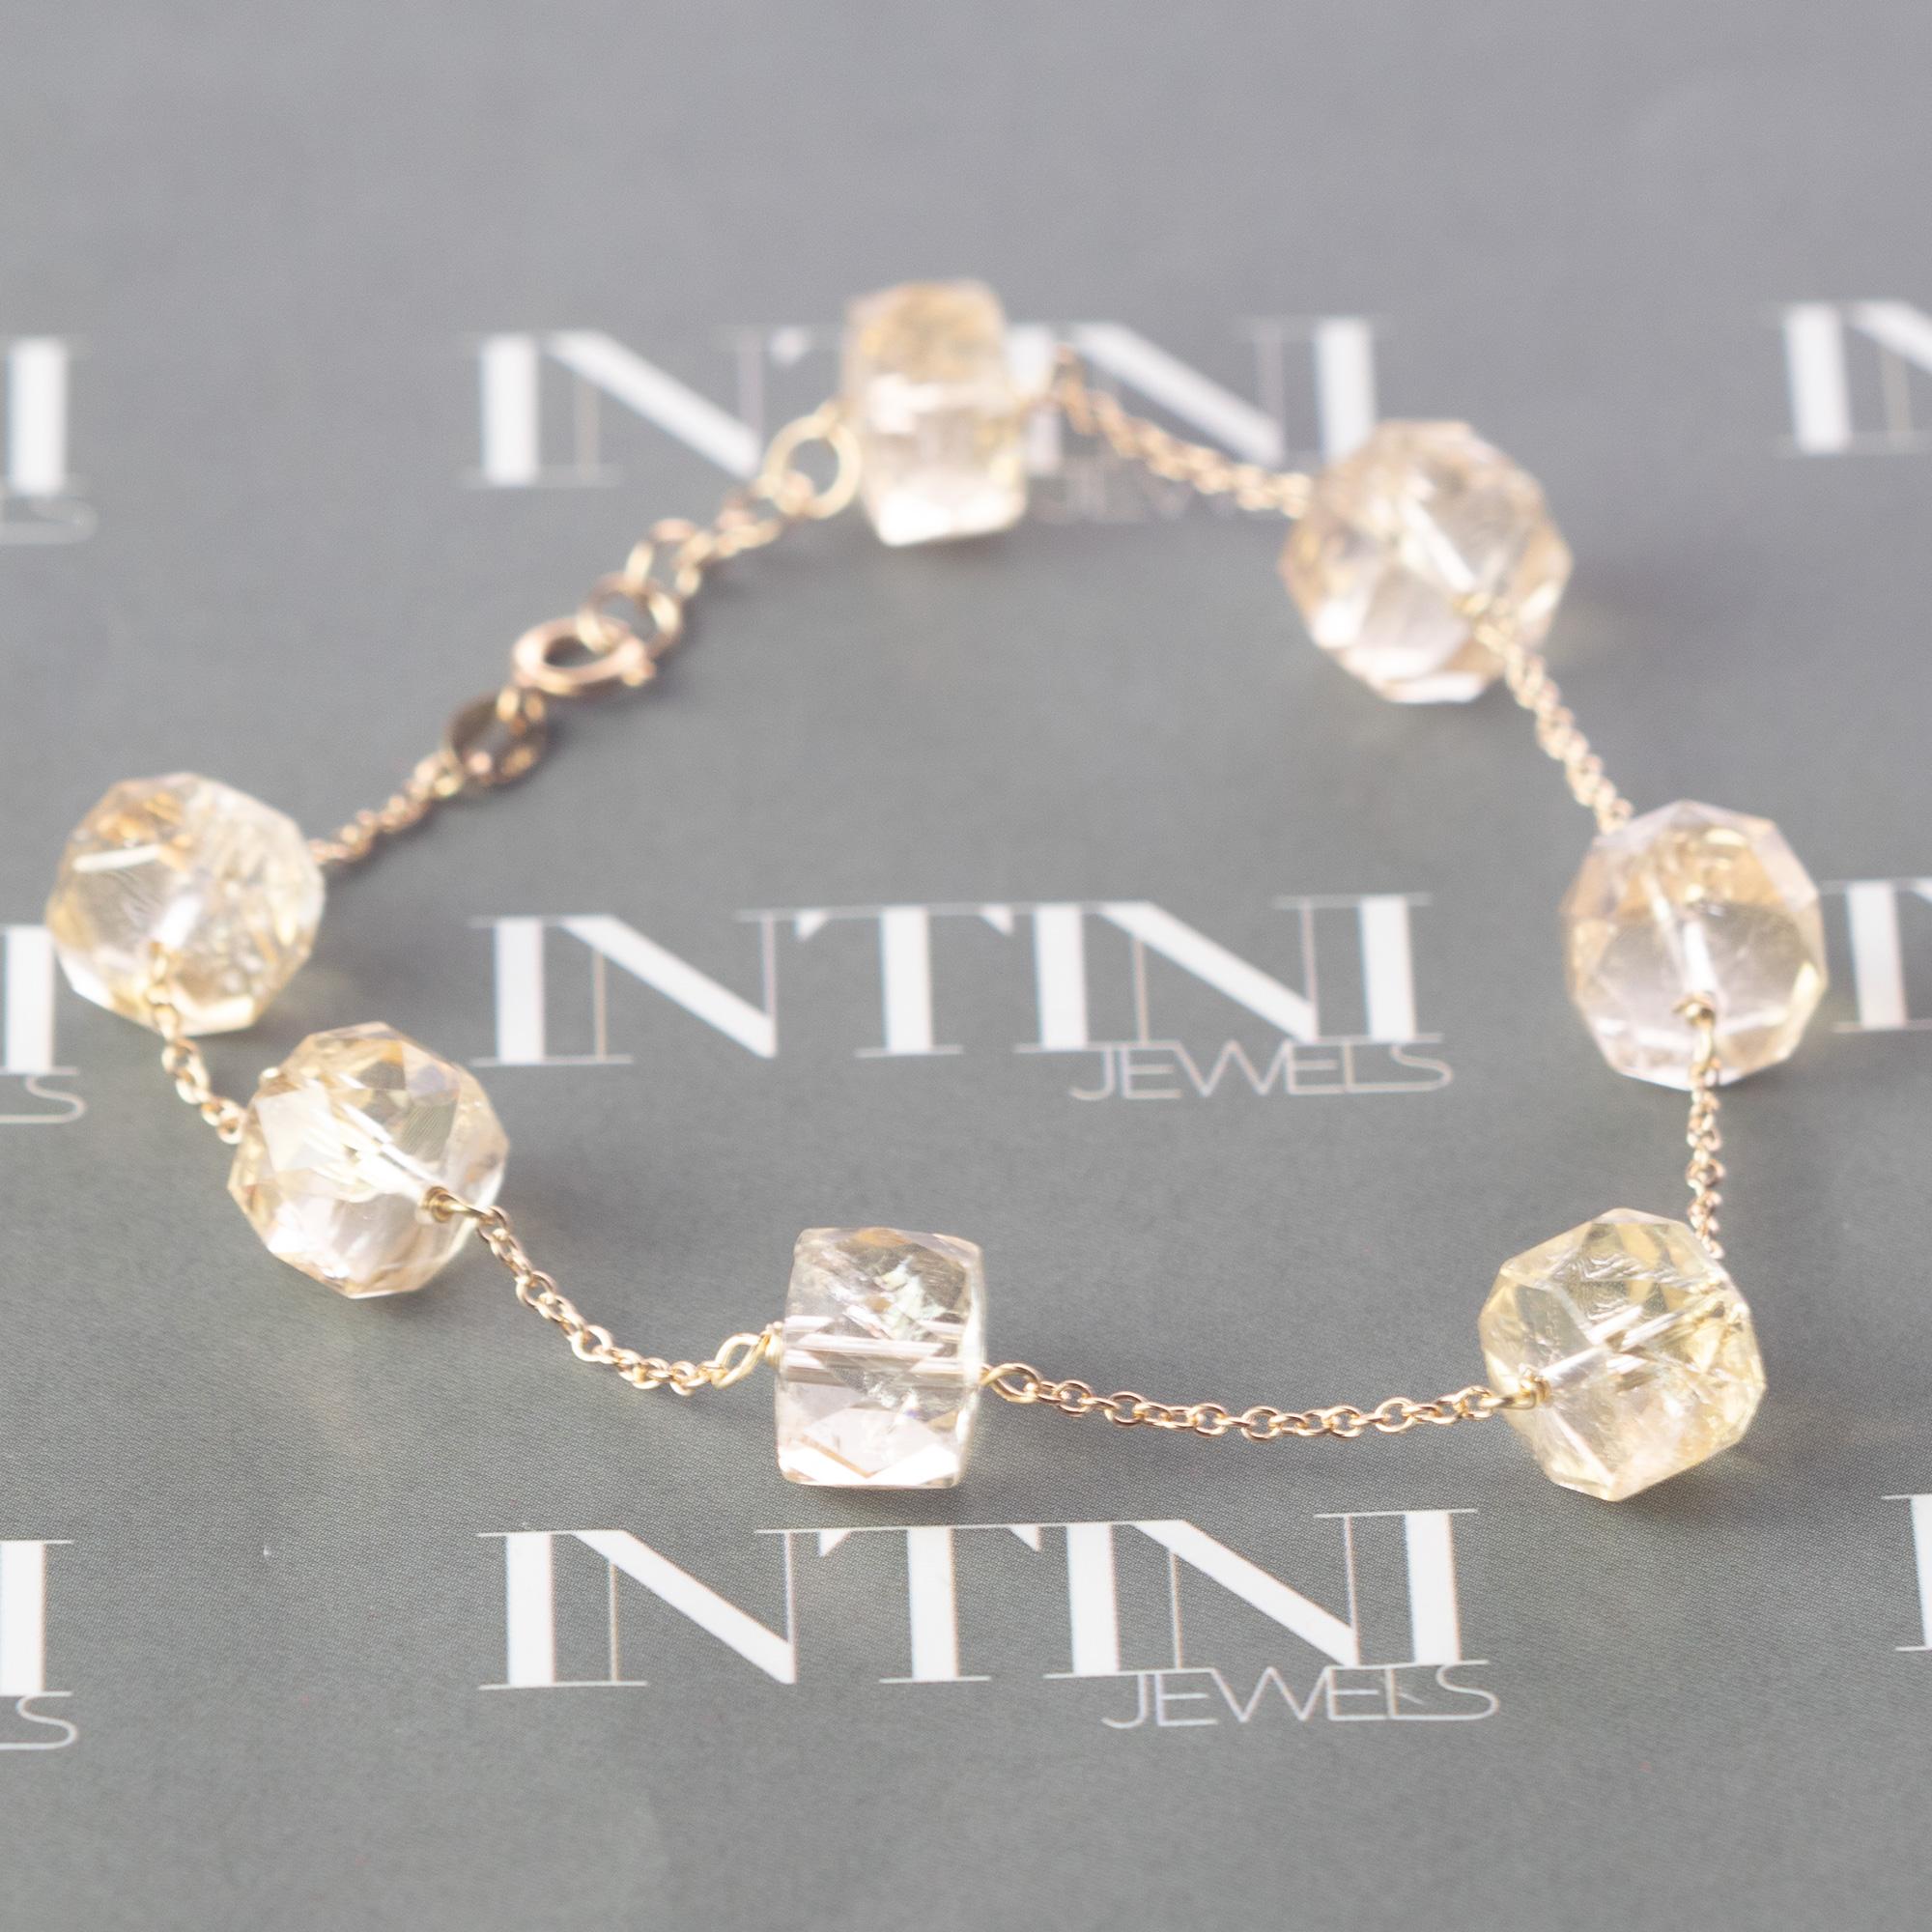 Art Nouveau Intini Jewels 18 Karat Yellow Gold Chain Citrine Beads Handmade Chain Bracelet For Sale